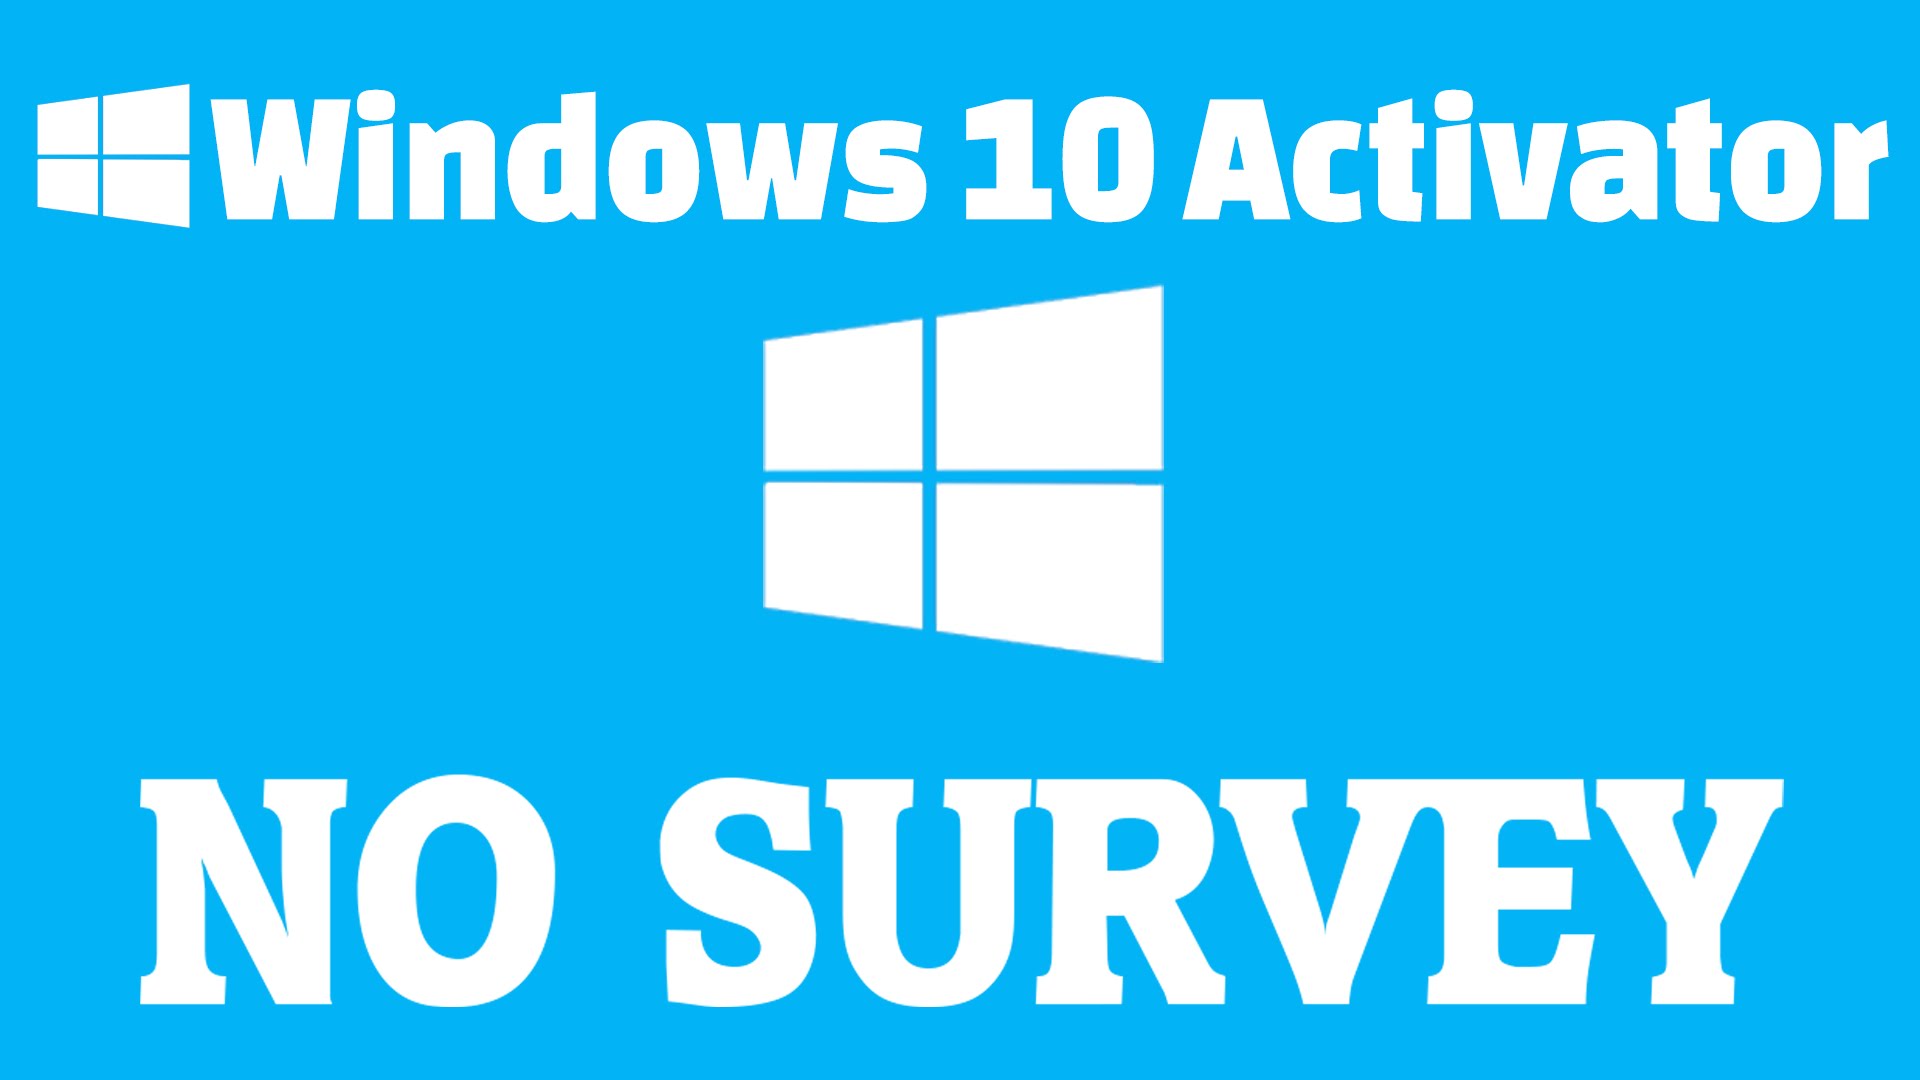 Активация windows 10 activator. Активатор Windows. Активатор Windows 10. Активация Windows 10. Activation Windows 10.